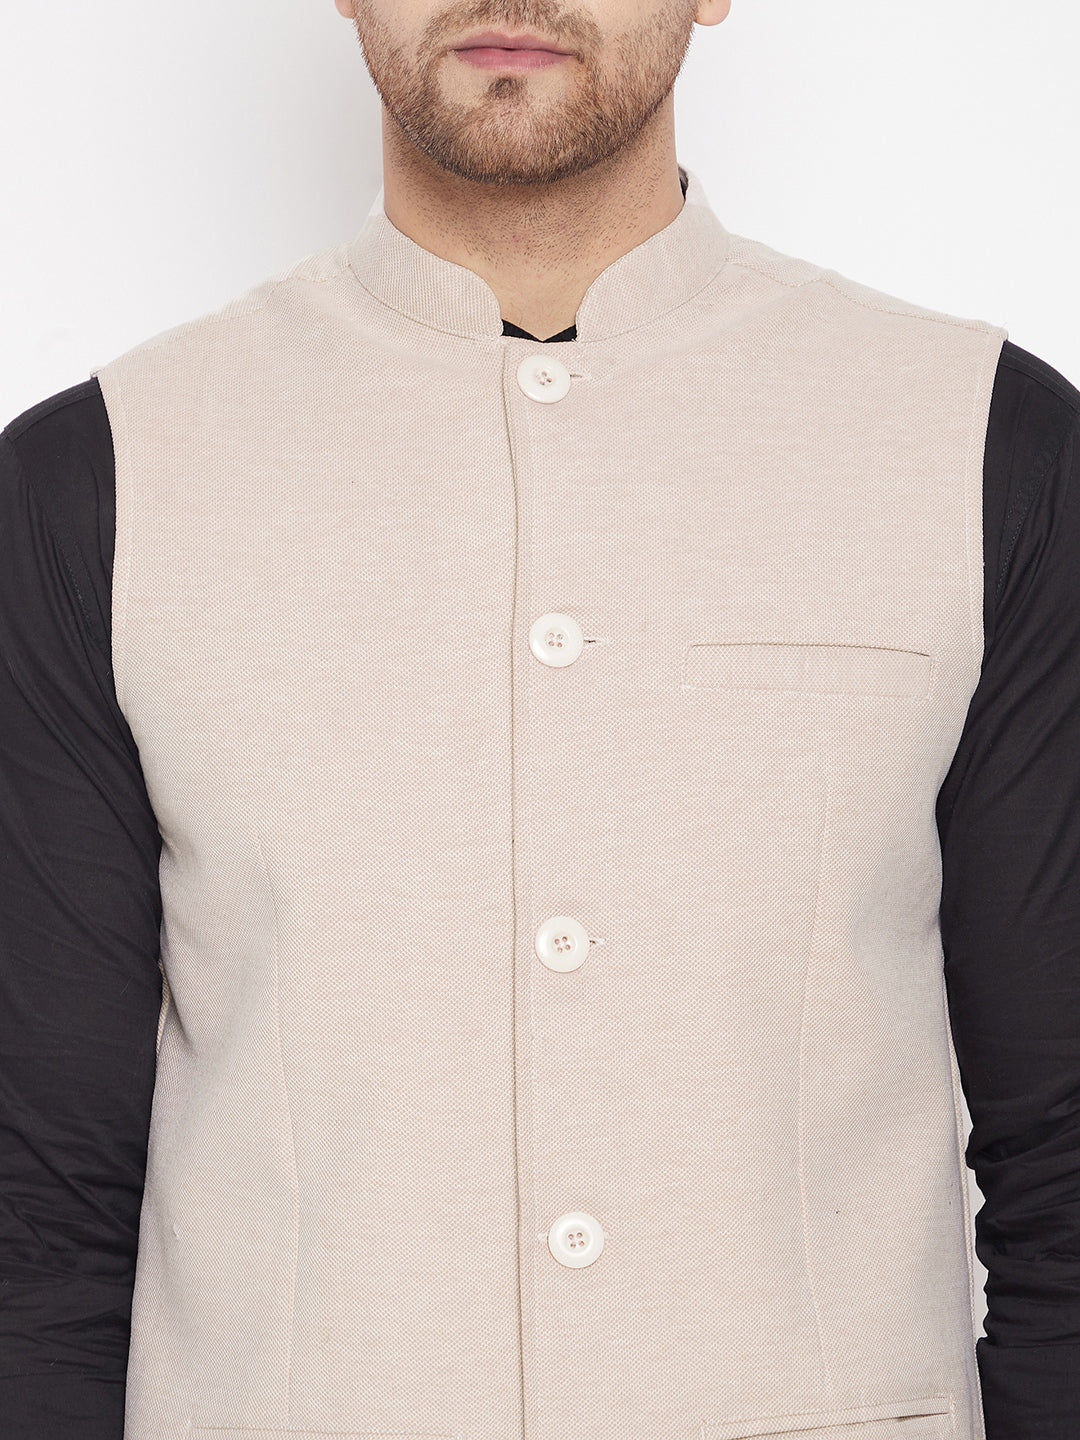 Men's Cream Color Woven Nehru Jacket - Even Apparels